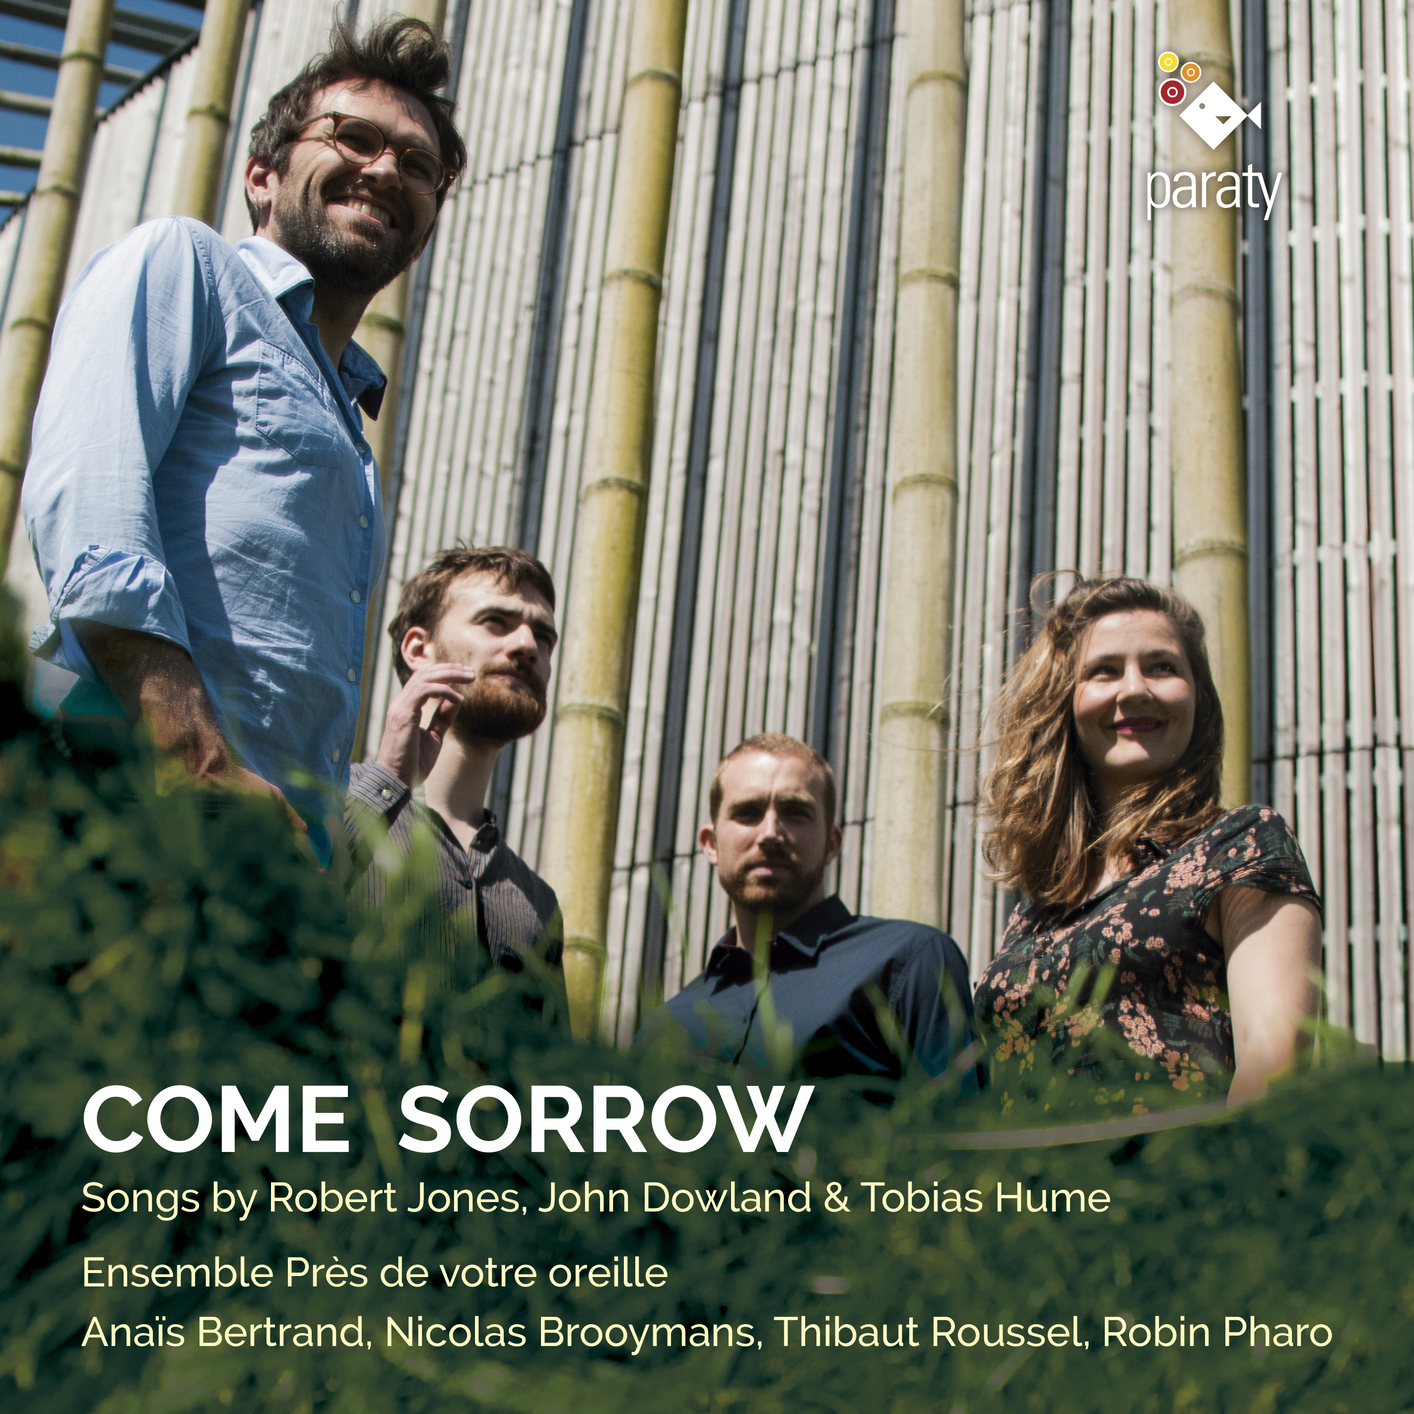 Ensemble Pres de votre oreille, Robin Pharo, Thibaut Roussel, Anais Bertrand & Nicolas Brooymans - Come Sorrow (2019) [FLAC 24bit/96kHz]